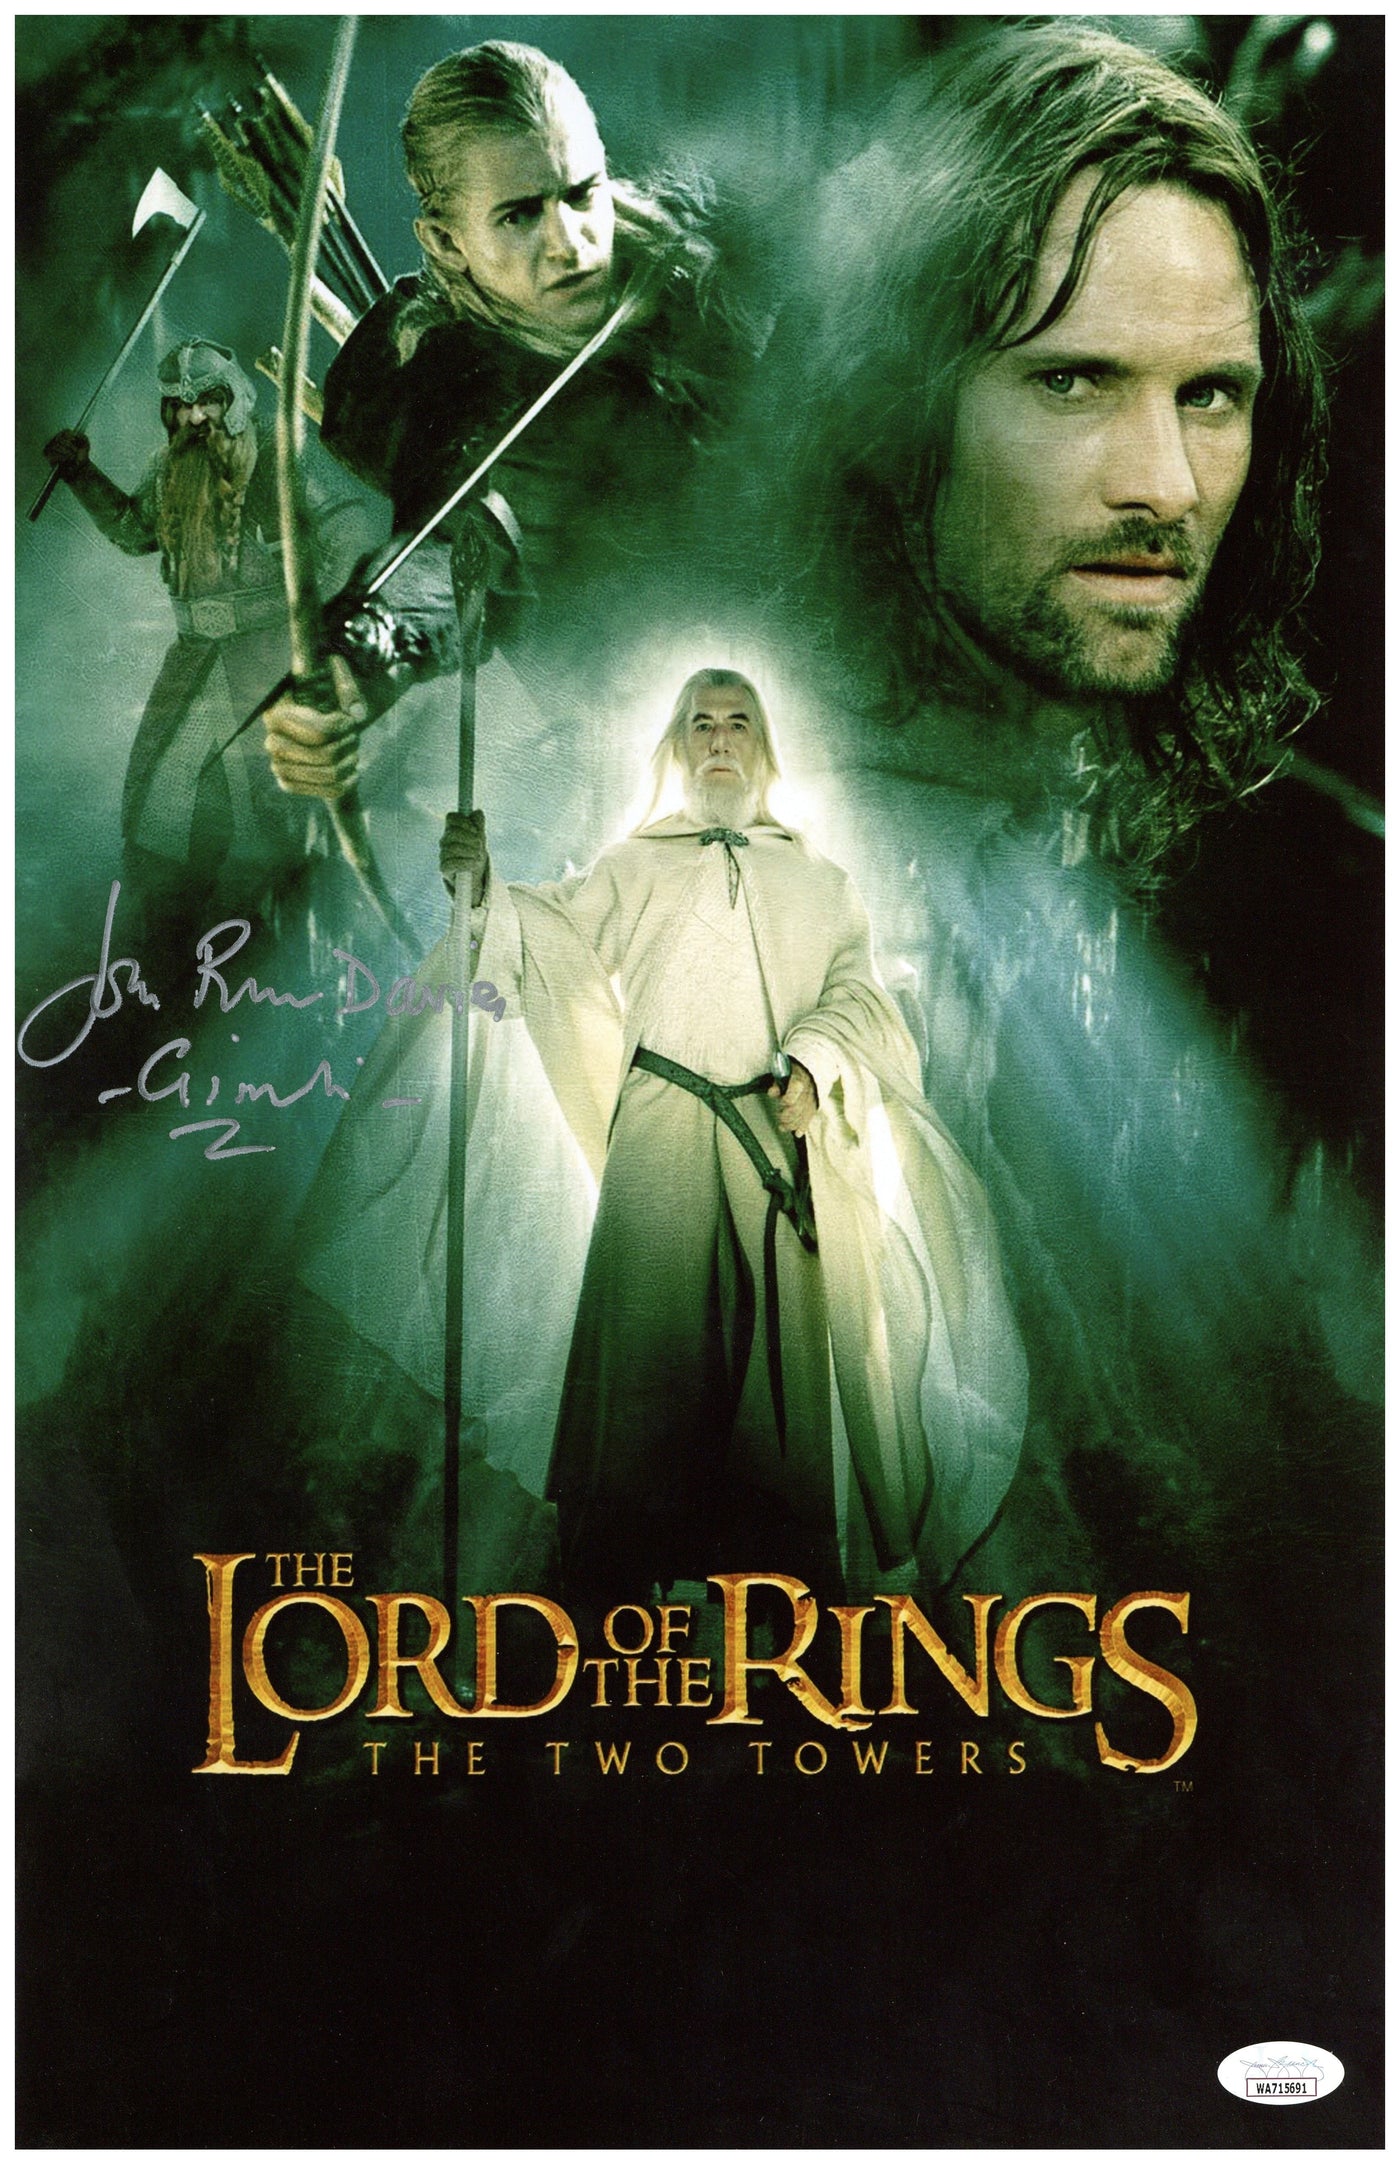 John Rhys-Davies Signed 11x17 Photo The Lord of the Rings Gimli Autographed JSA COA